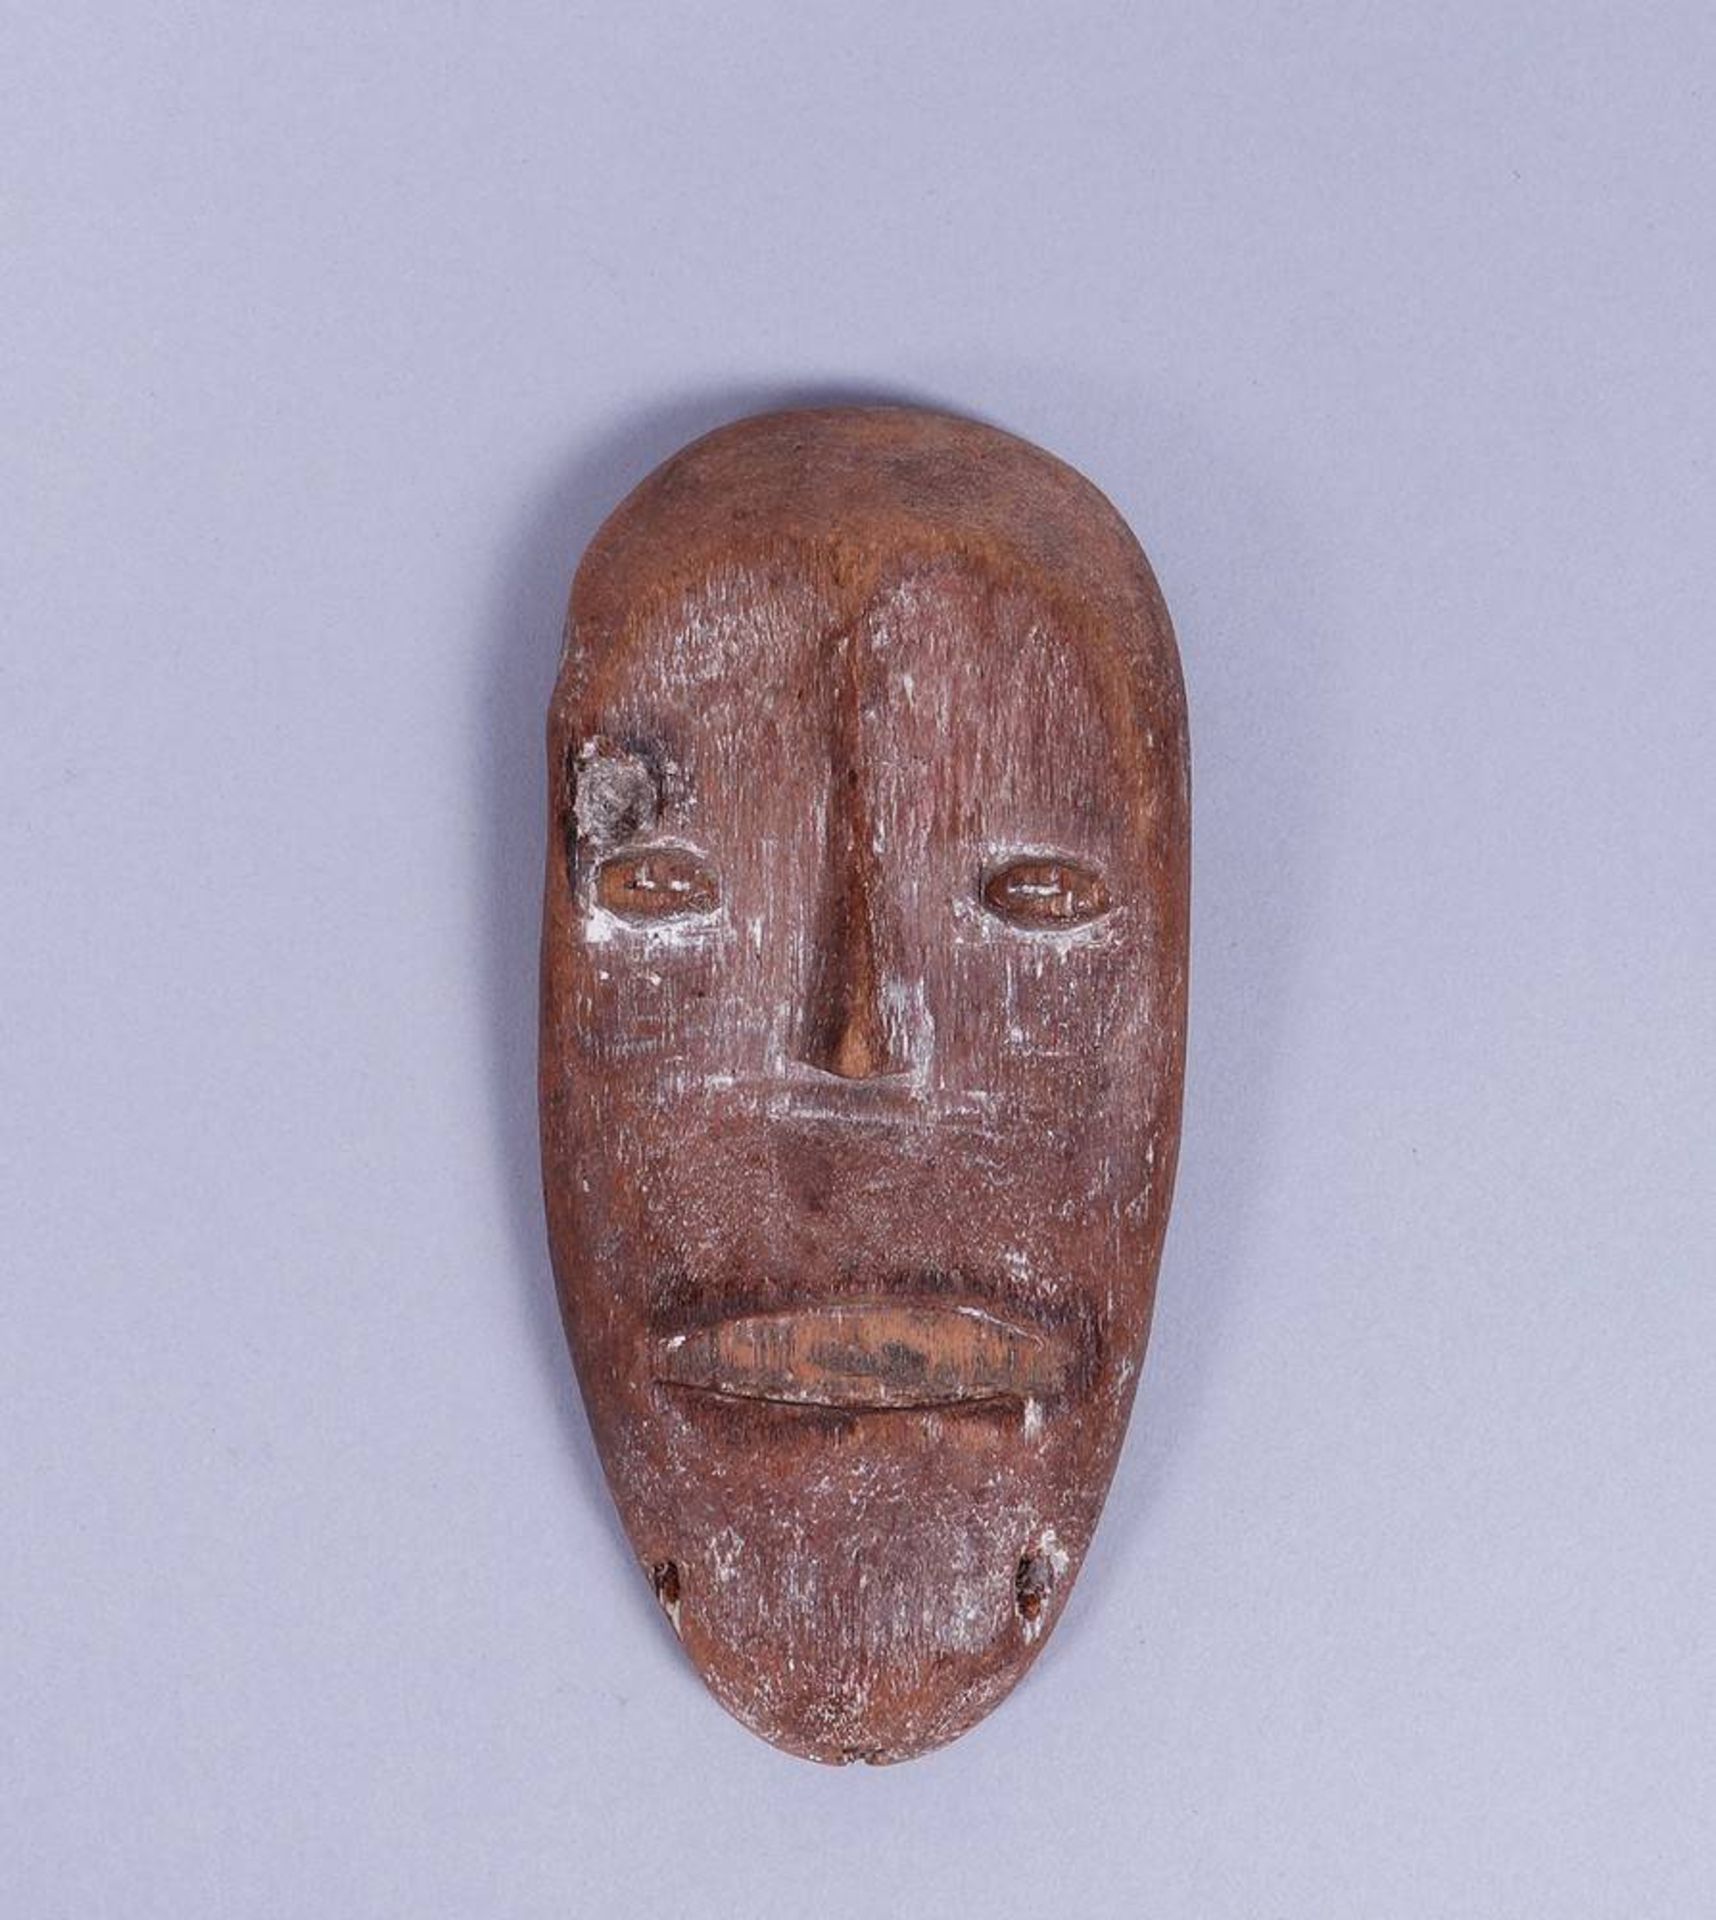 Passport-Maske, Afrika Holz, kalkige Reste, ovoide Form, von der Stirn gezogene lange, schmale